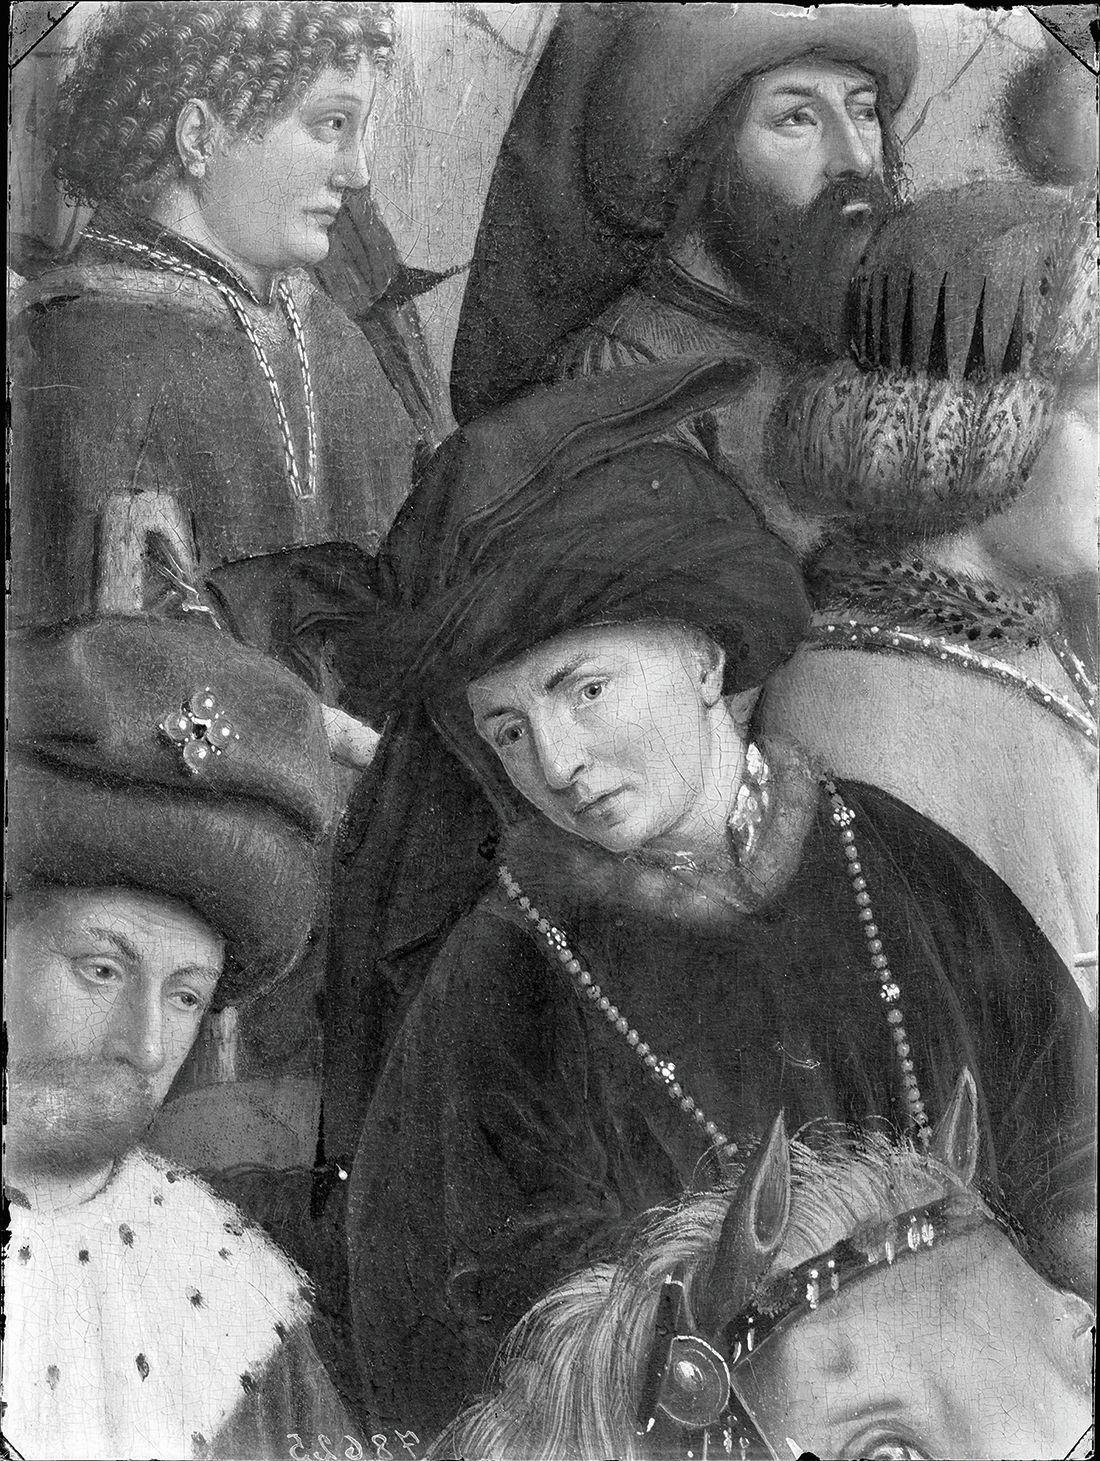 Jan van Eyck, Portrait of a Man (Self Portrait?), NG222